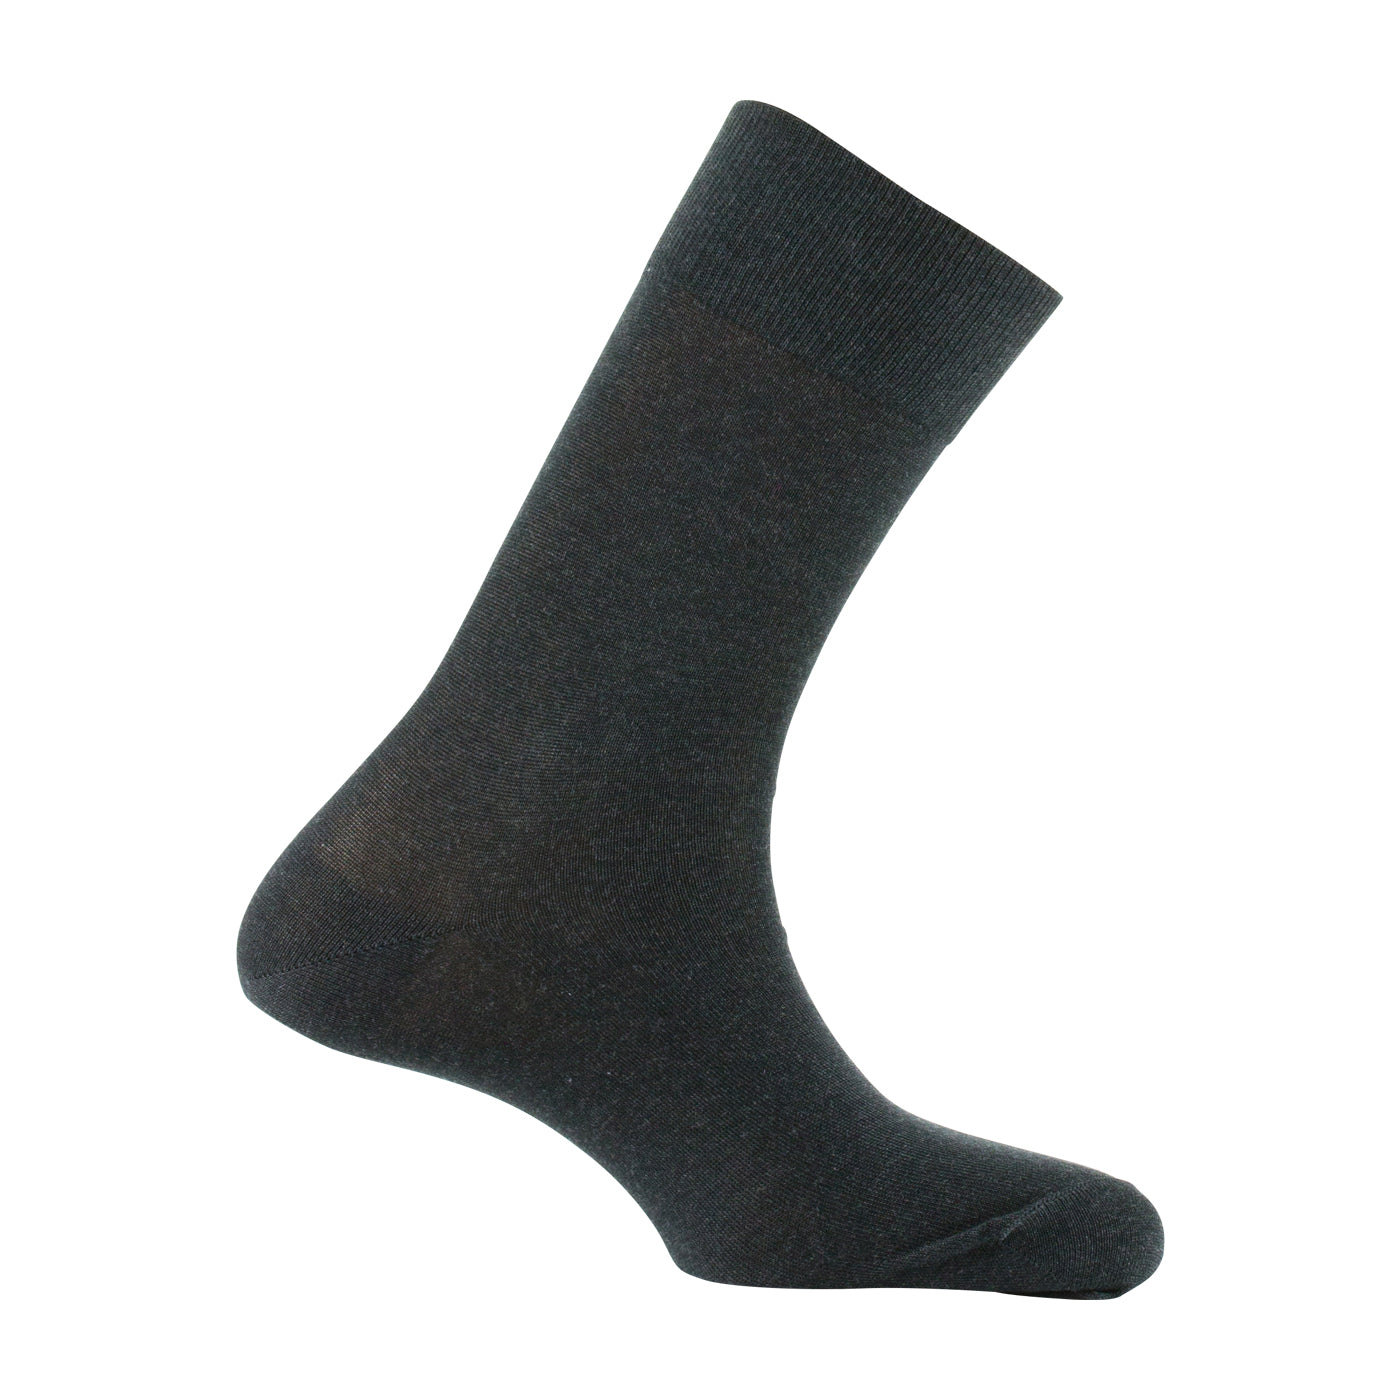 ANTHRACITE GRAY Scottish thread socks Made in France